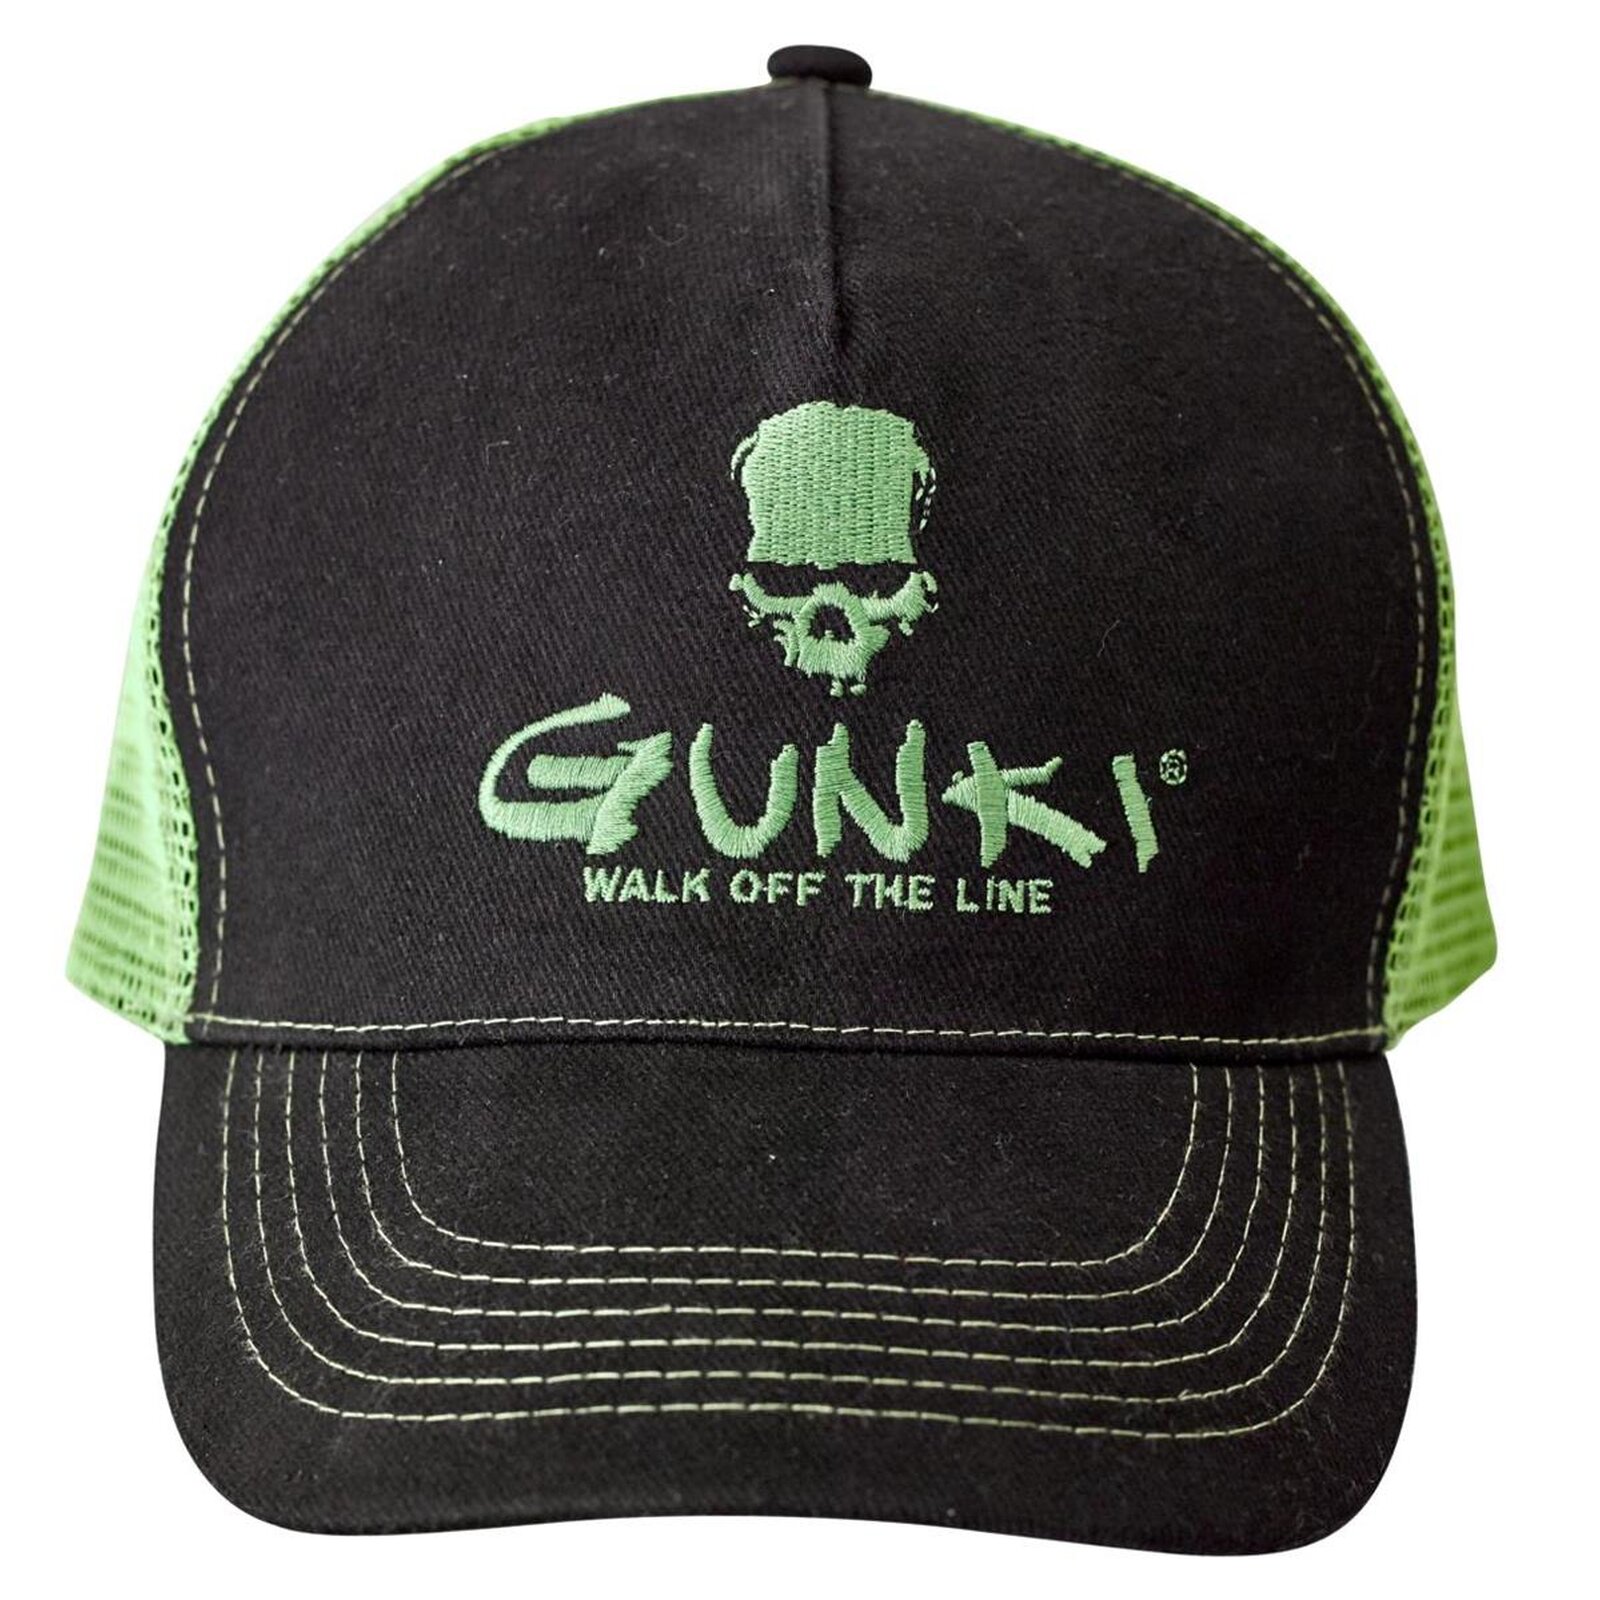 Gunki Black Trucker Hat